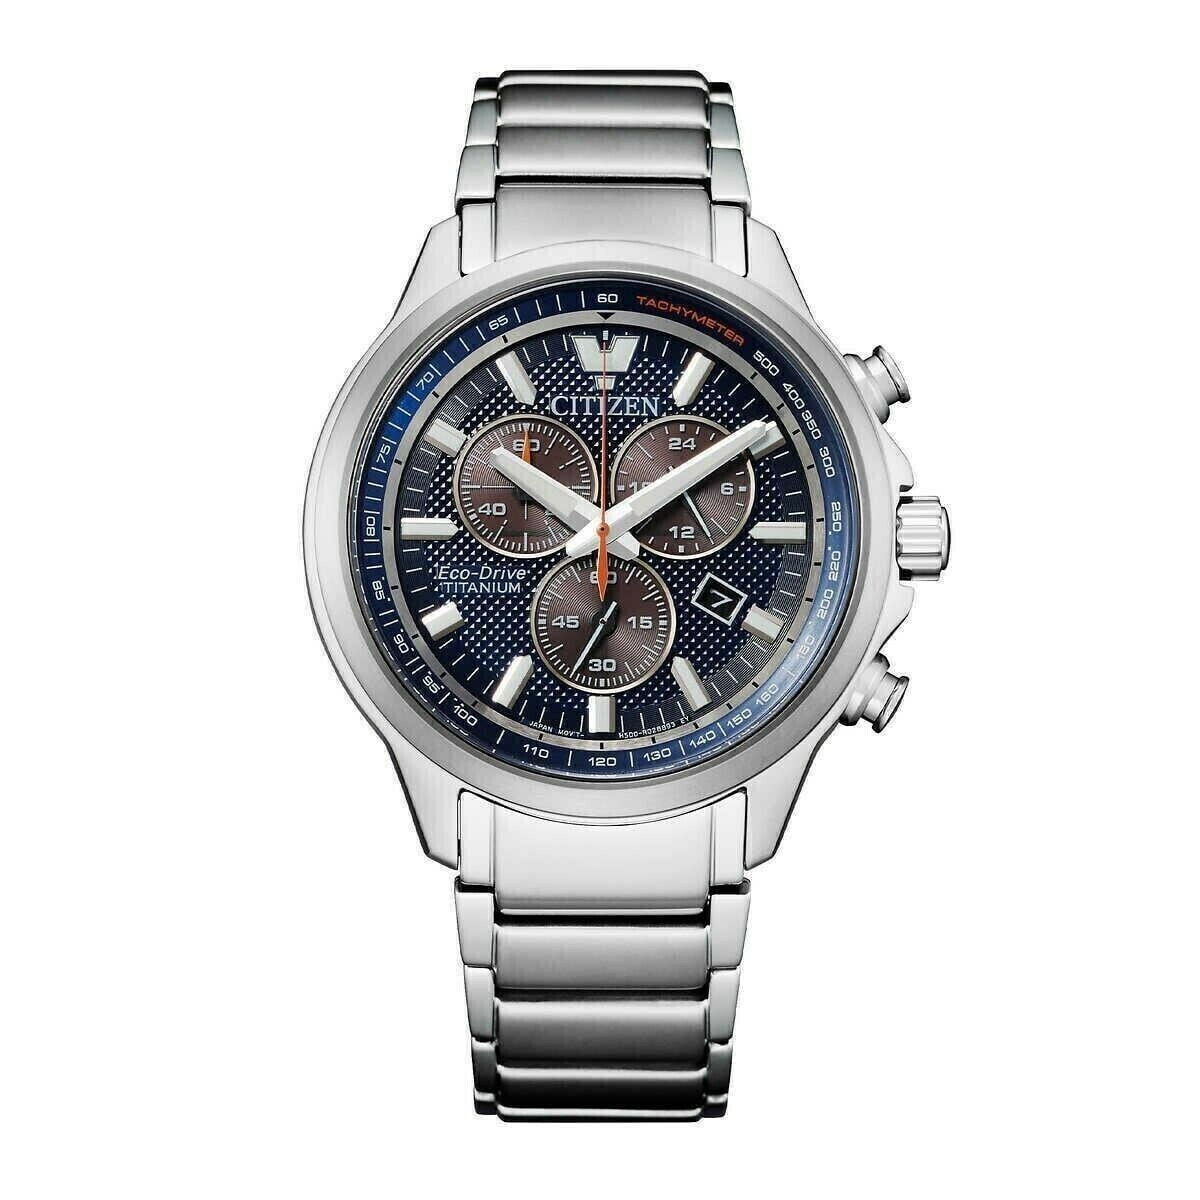 Citizen Men's Eco-Drive Weekender Chronograph Watch in Super Titanium, Blue  Dial (Model: AT2471-58L)